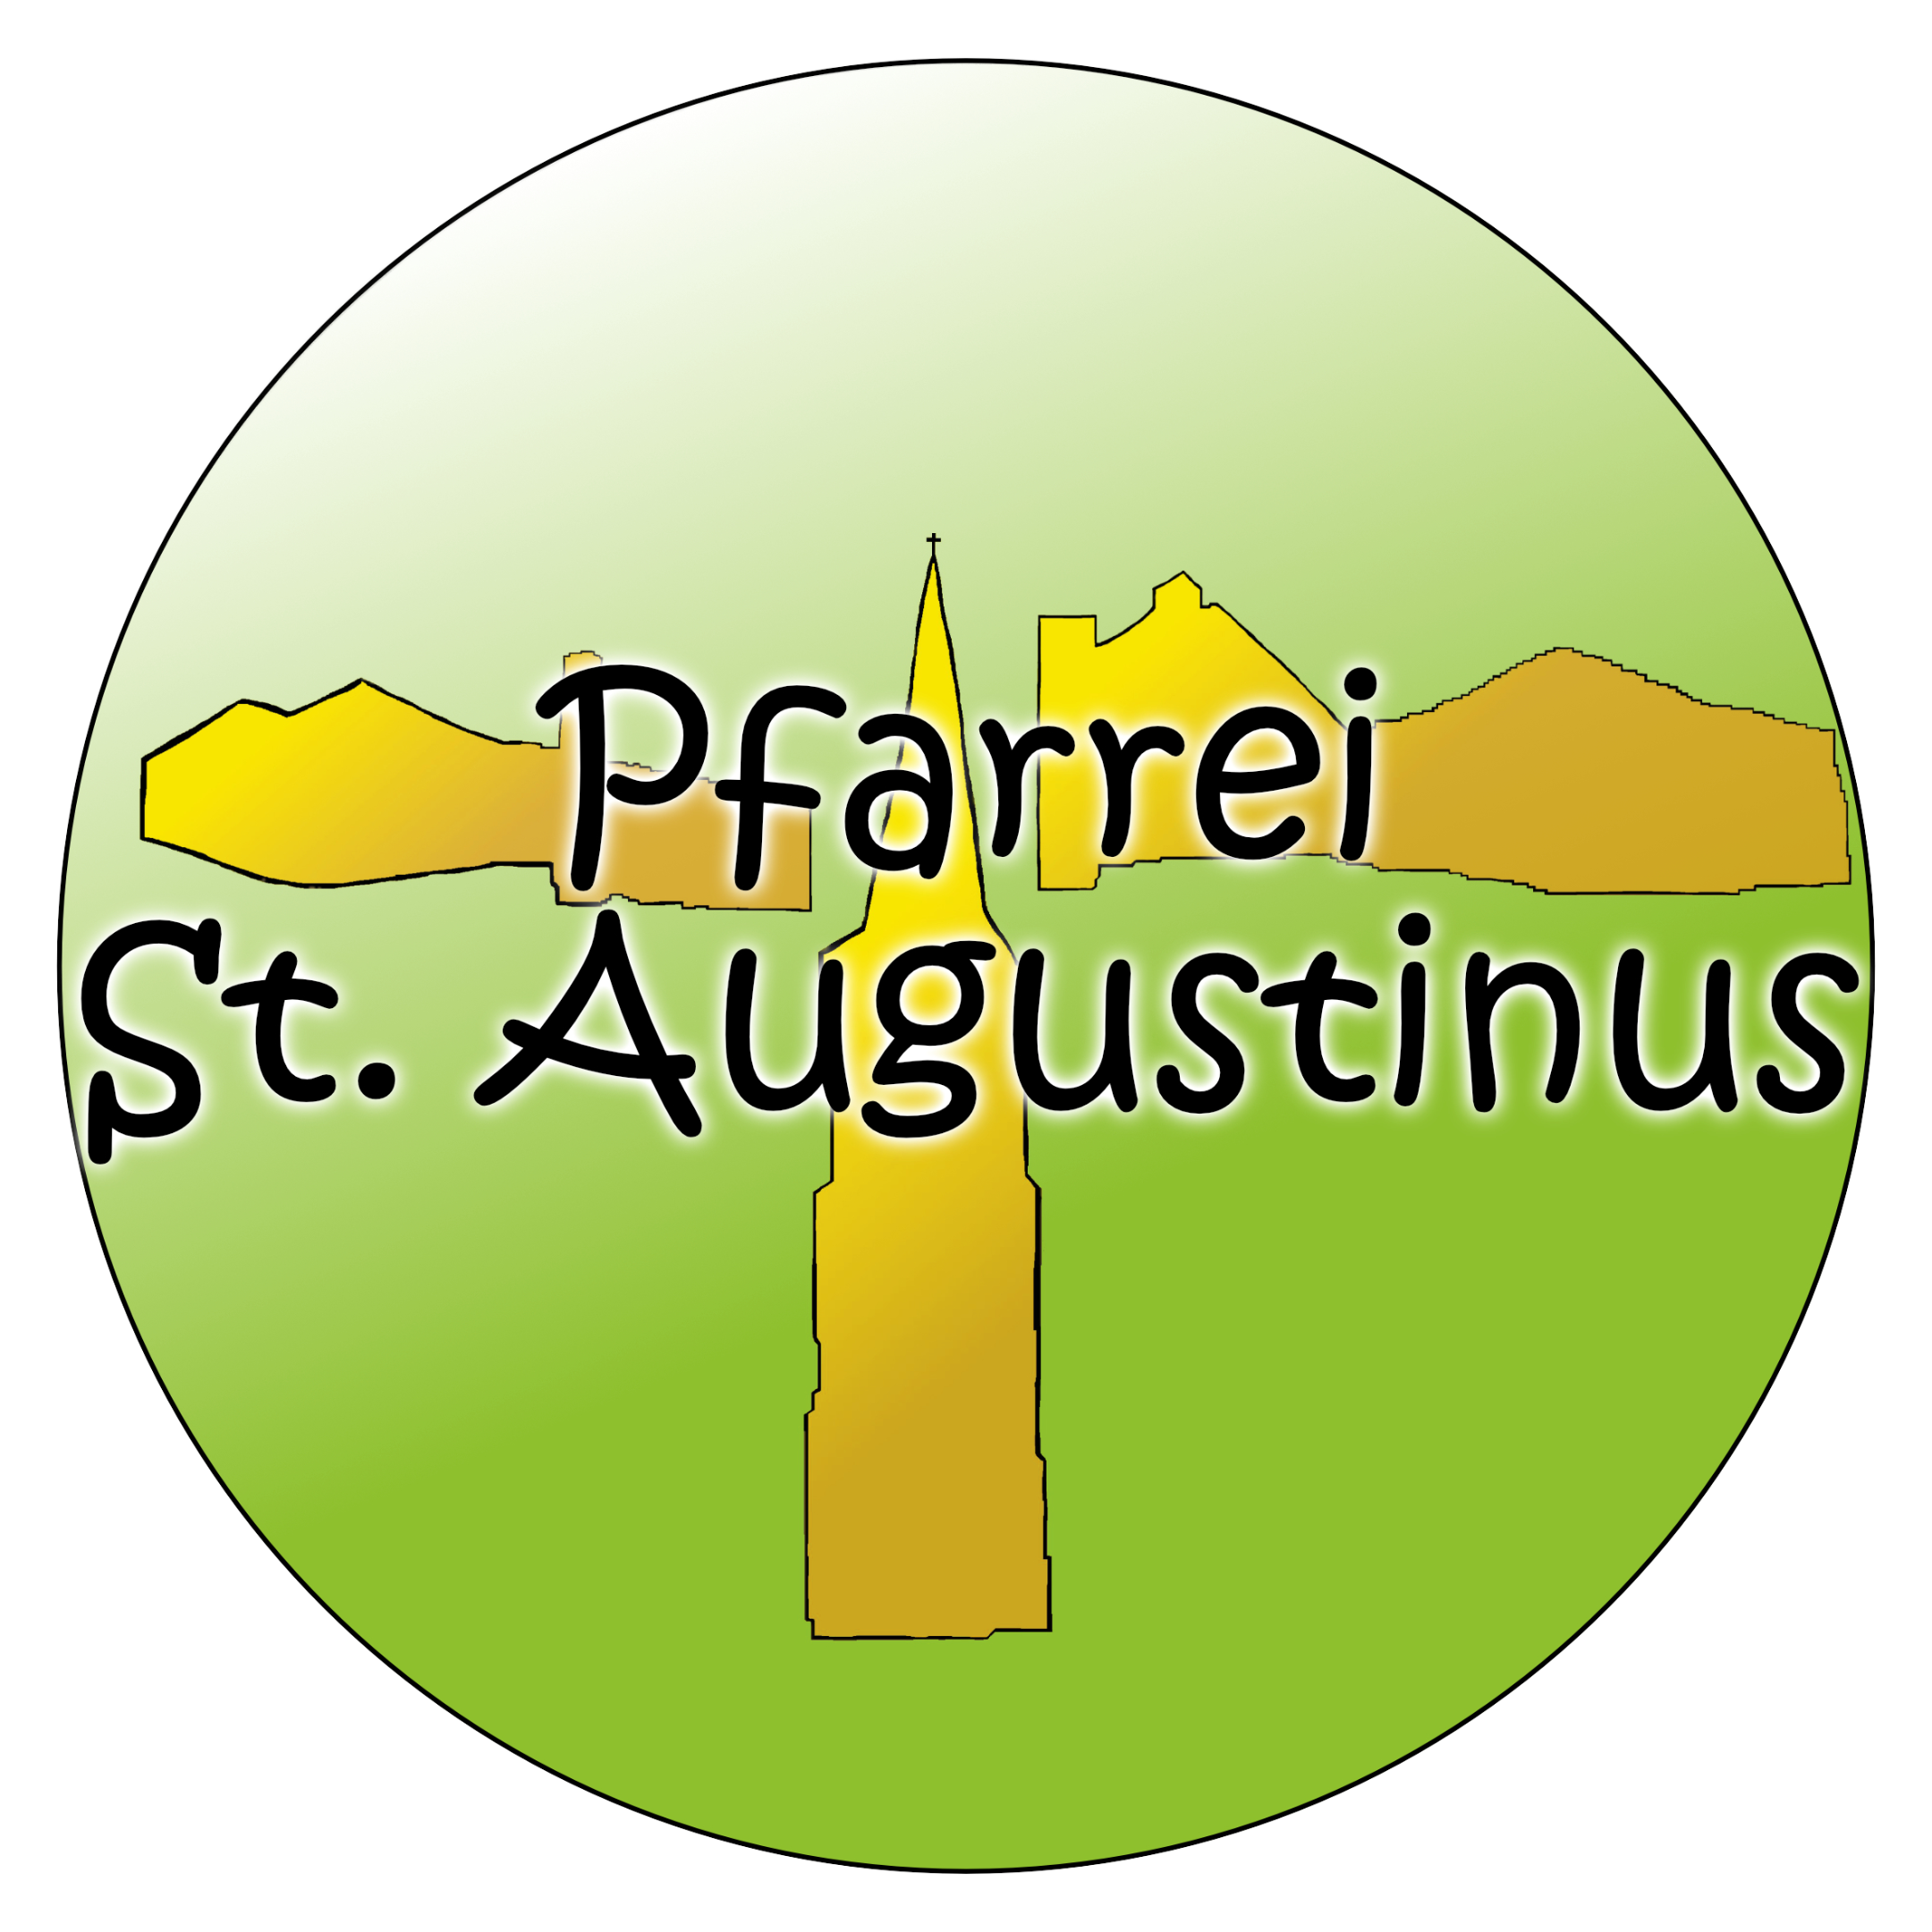 Pfarrei St. Augustinus